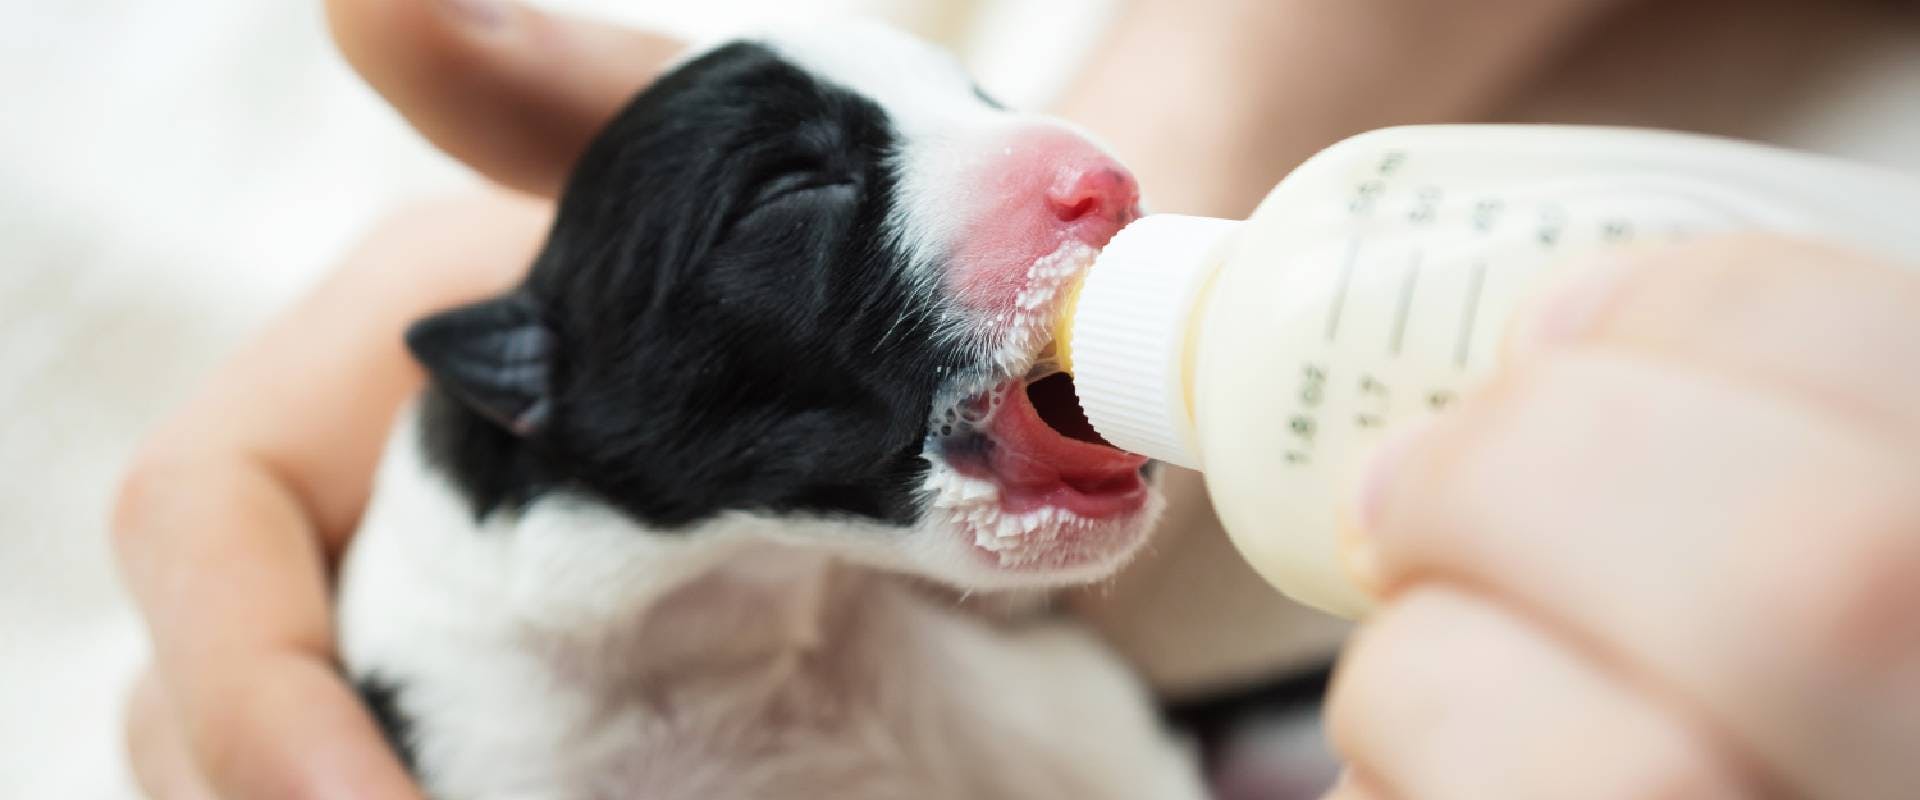 newborn puppy closeup drinking from the bottle 